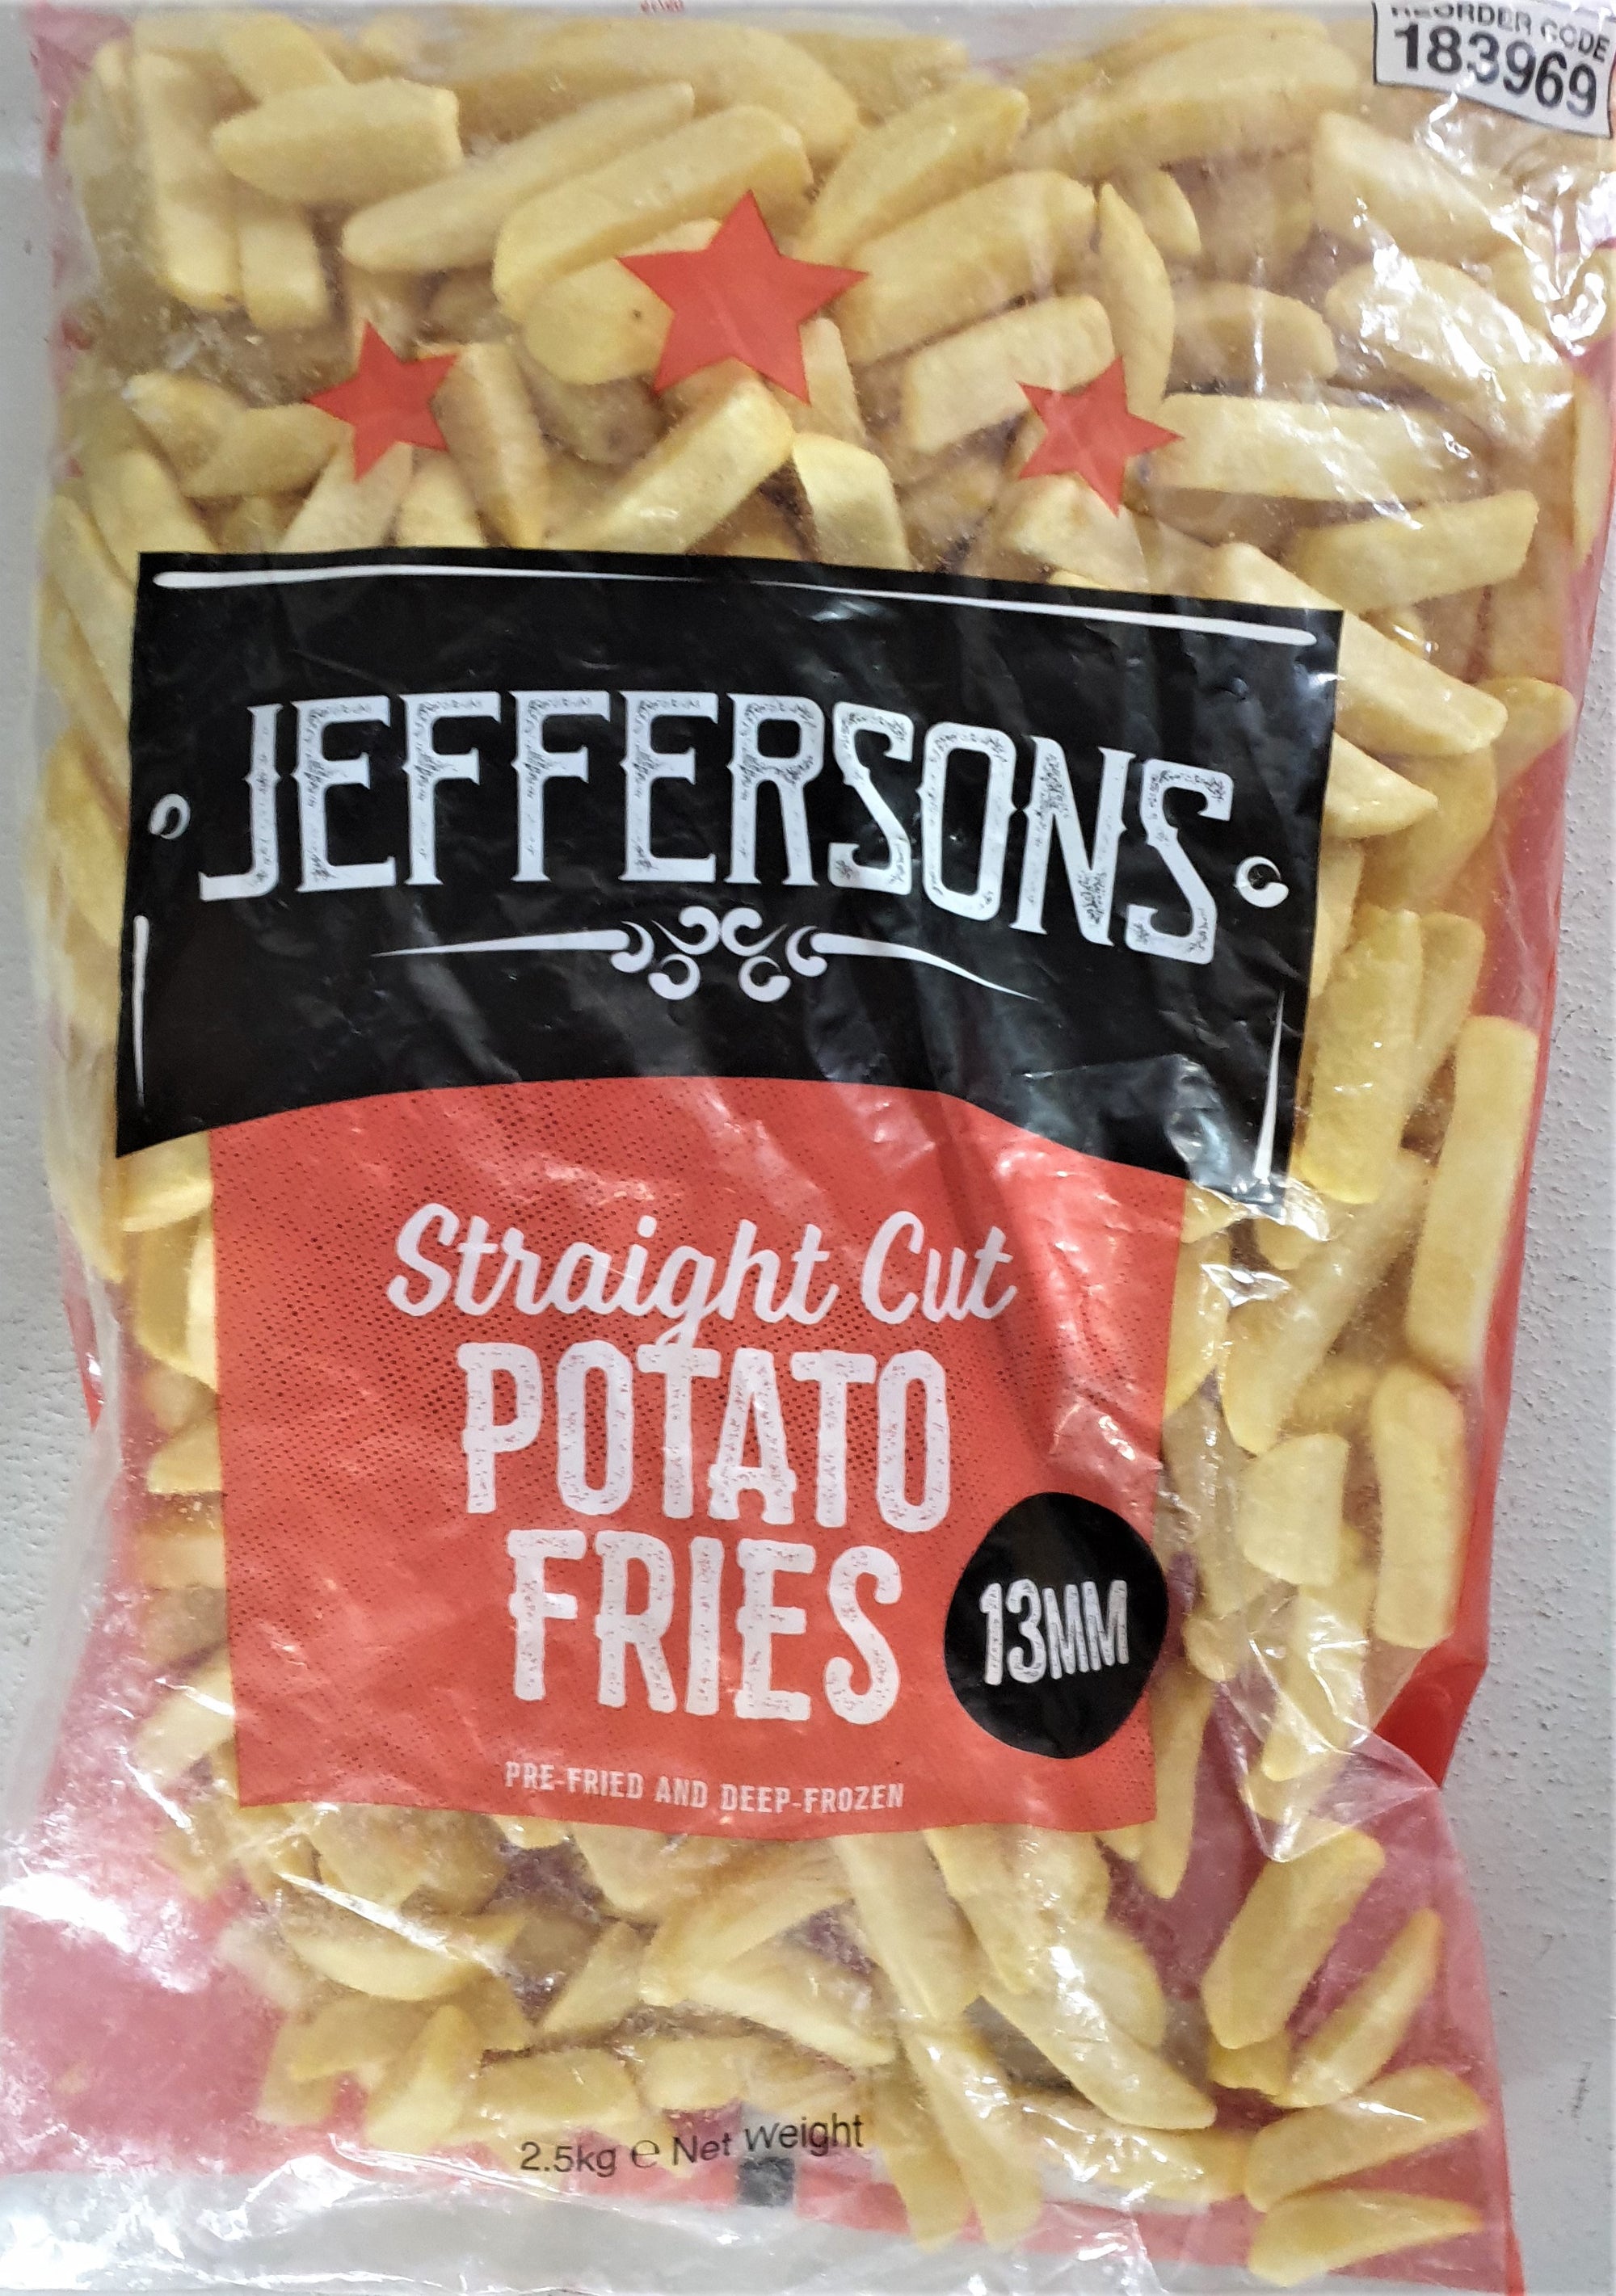 Jeffersons Straight Cut Potato Fries 13mm GF 2.5Kg